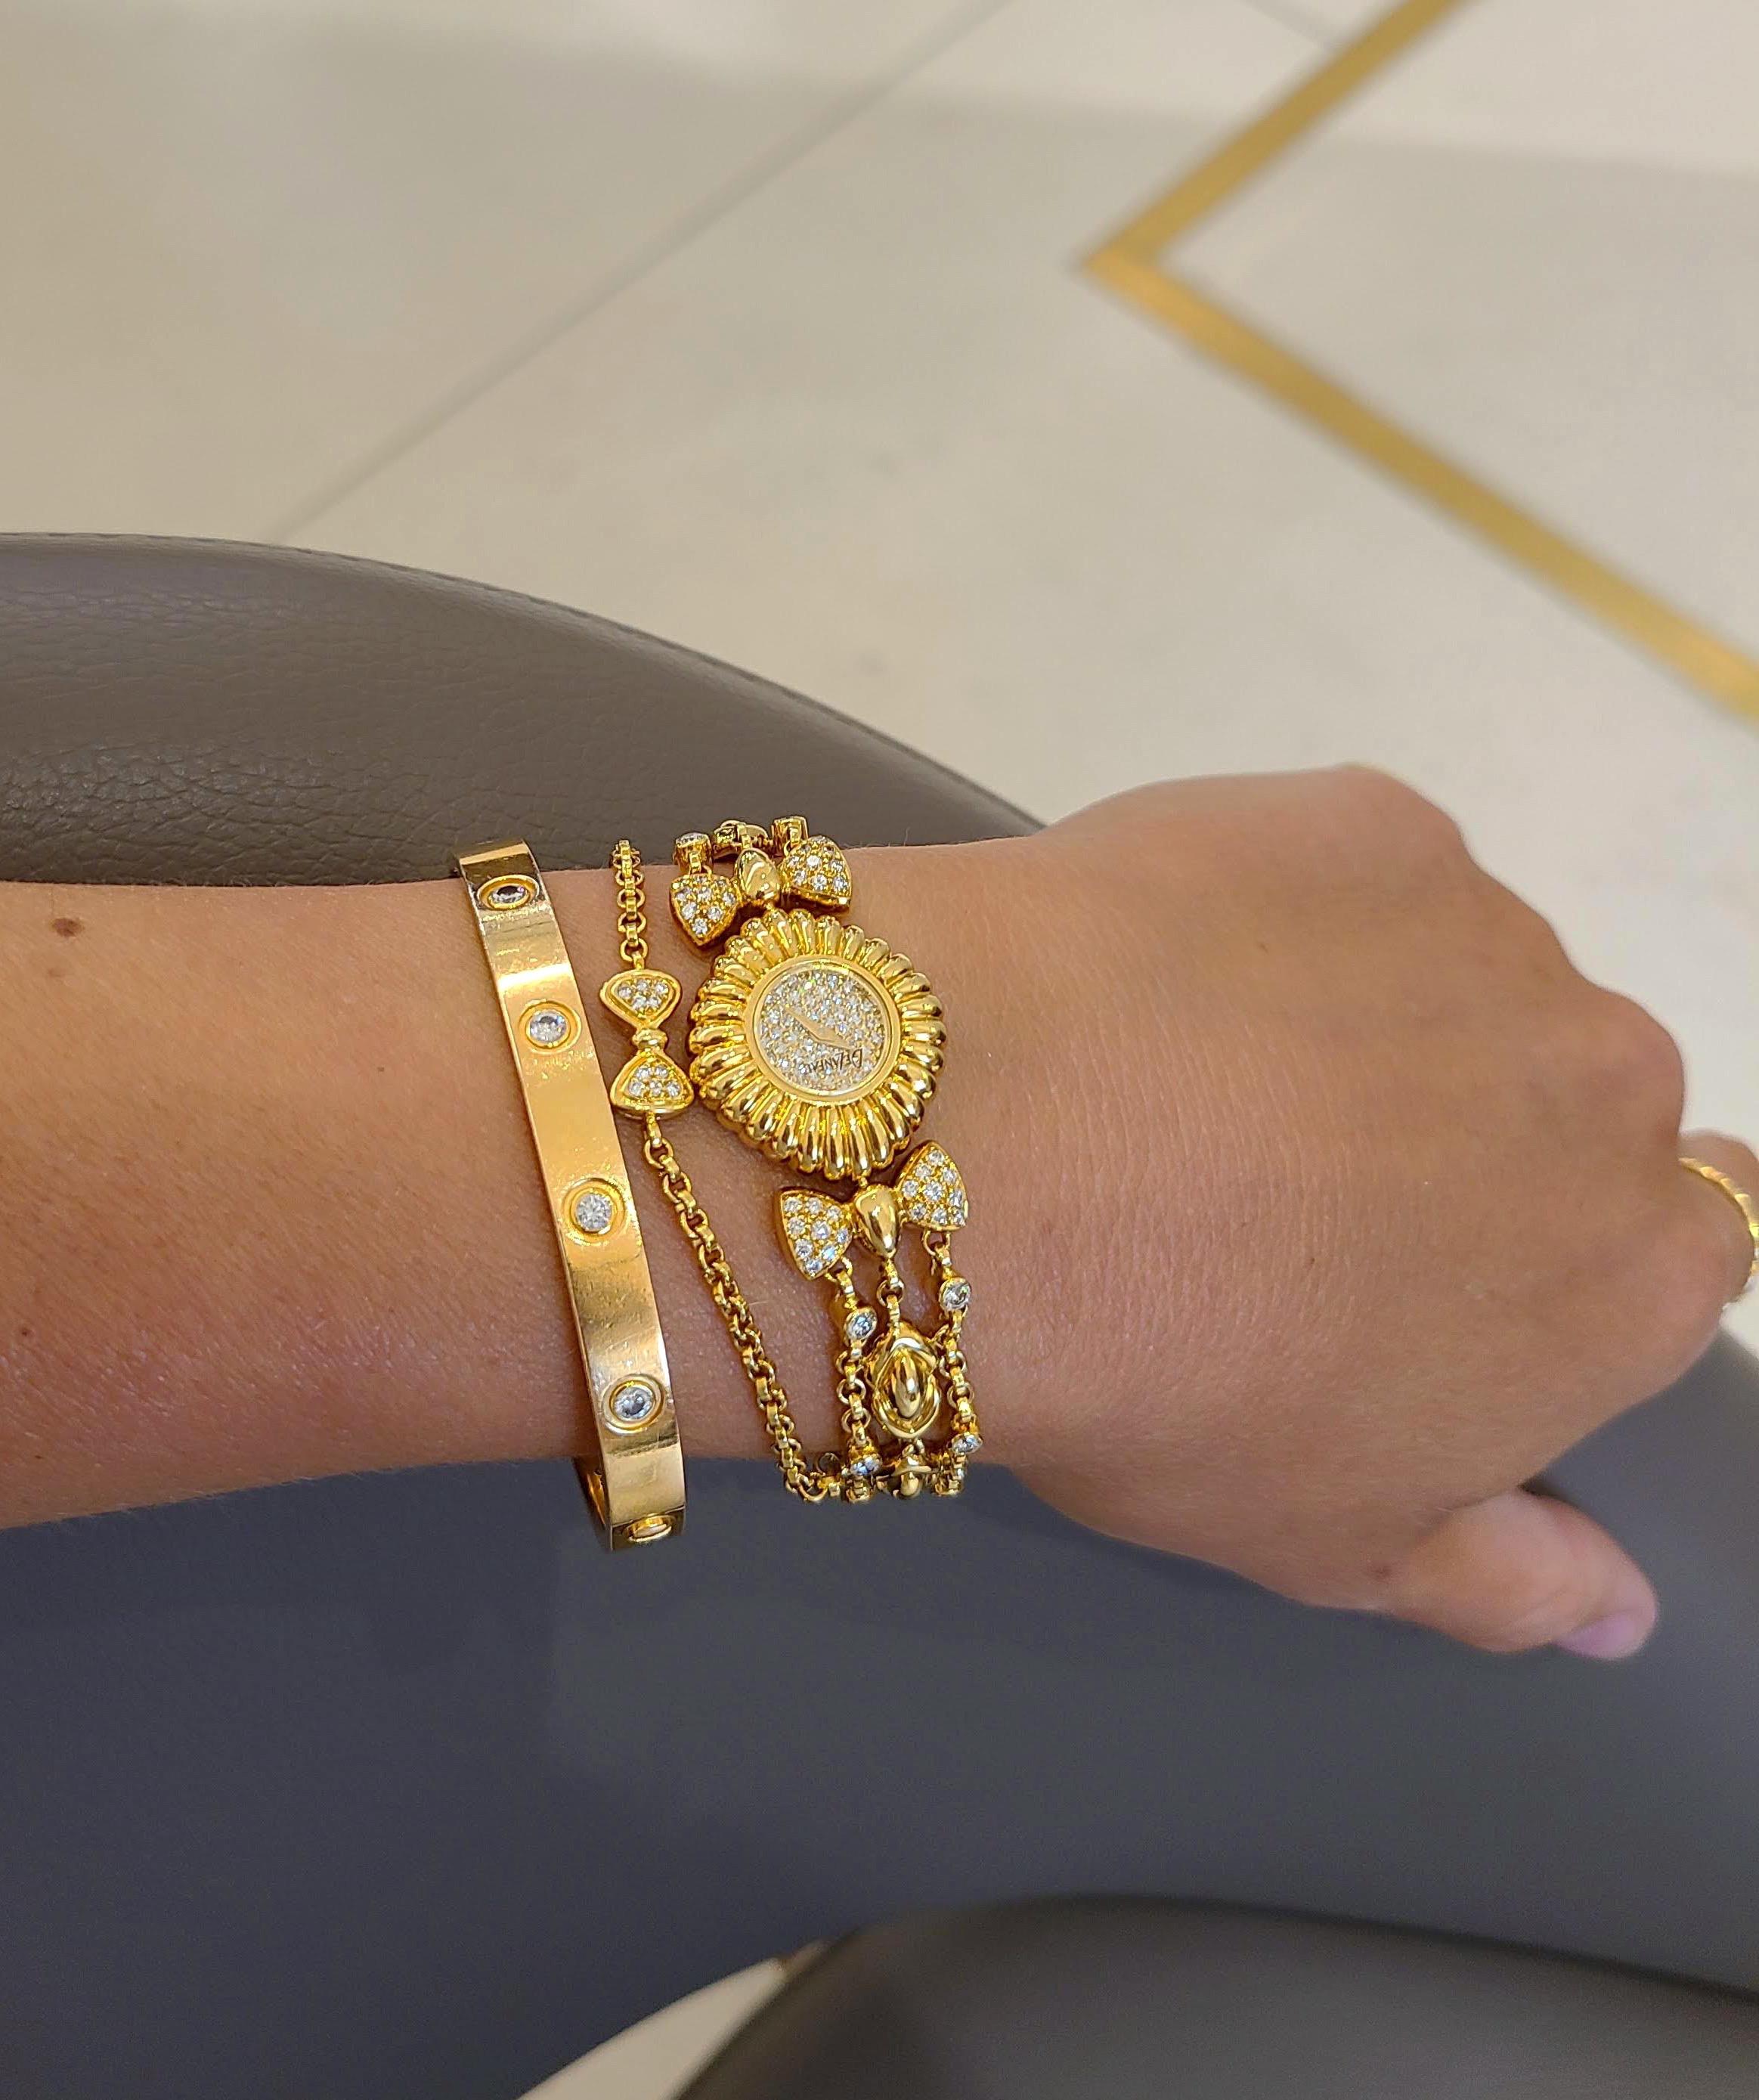 Contemporary DeLaneau 18 Karat Yellow Gold and Diamond Watch with Diamond Bows